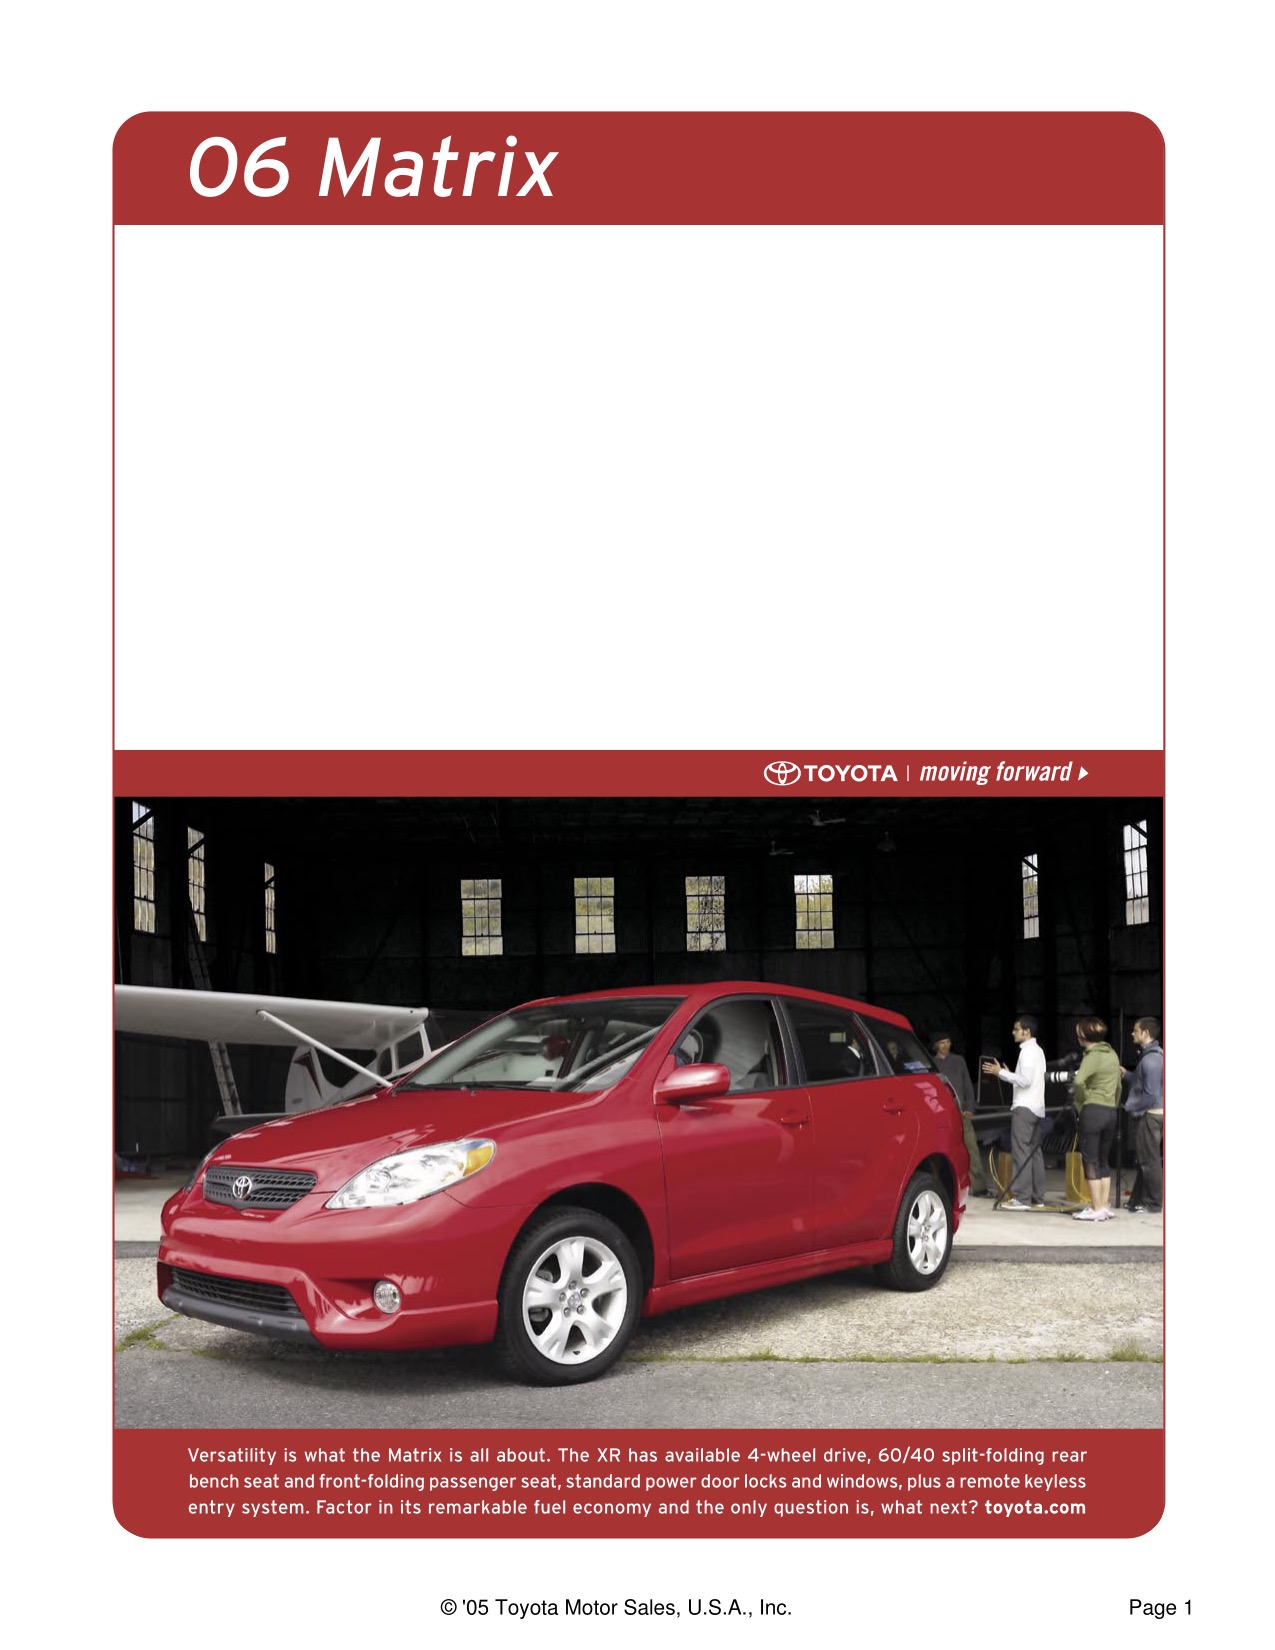 2006 Toyota Matrix Brochure Page 1